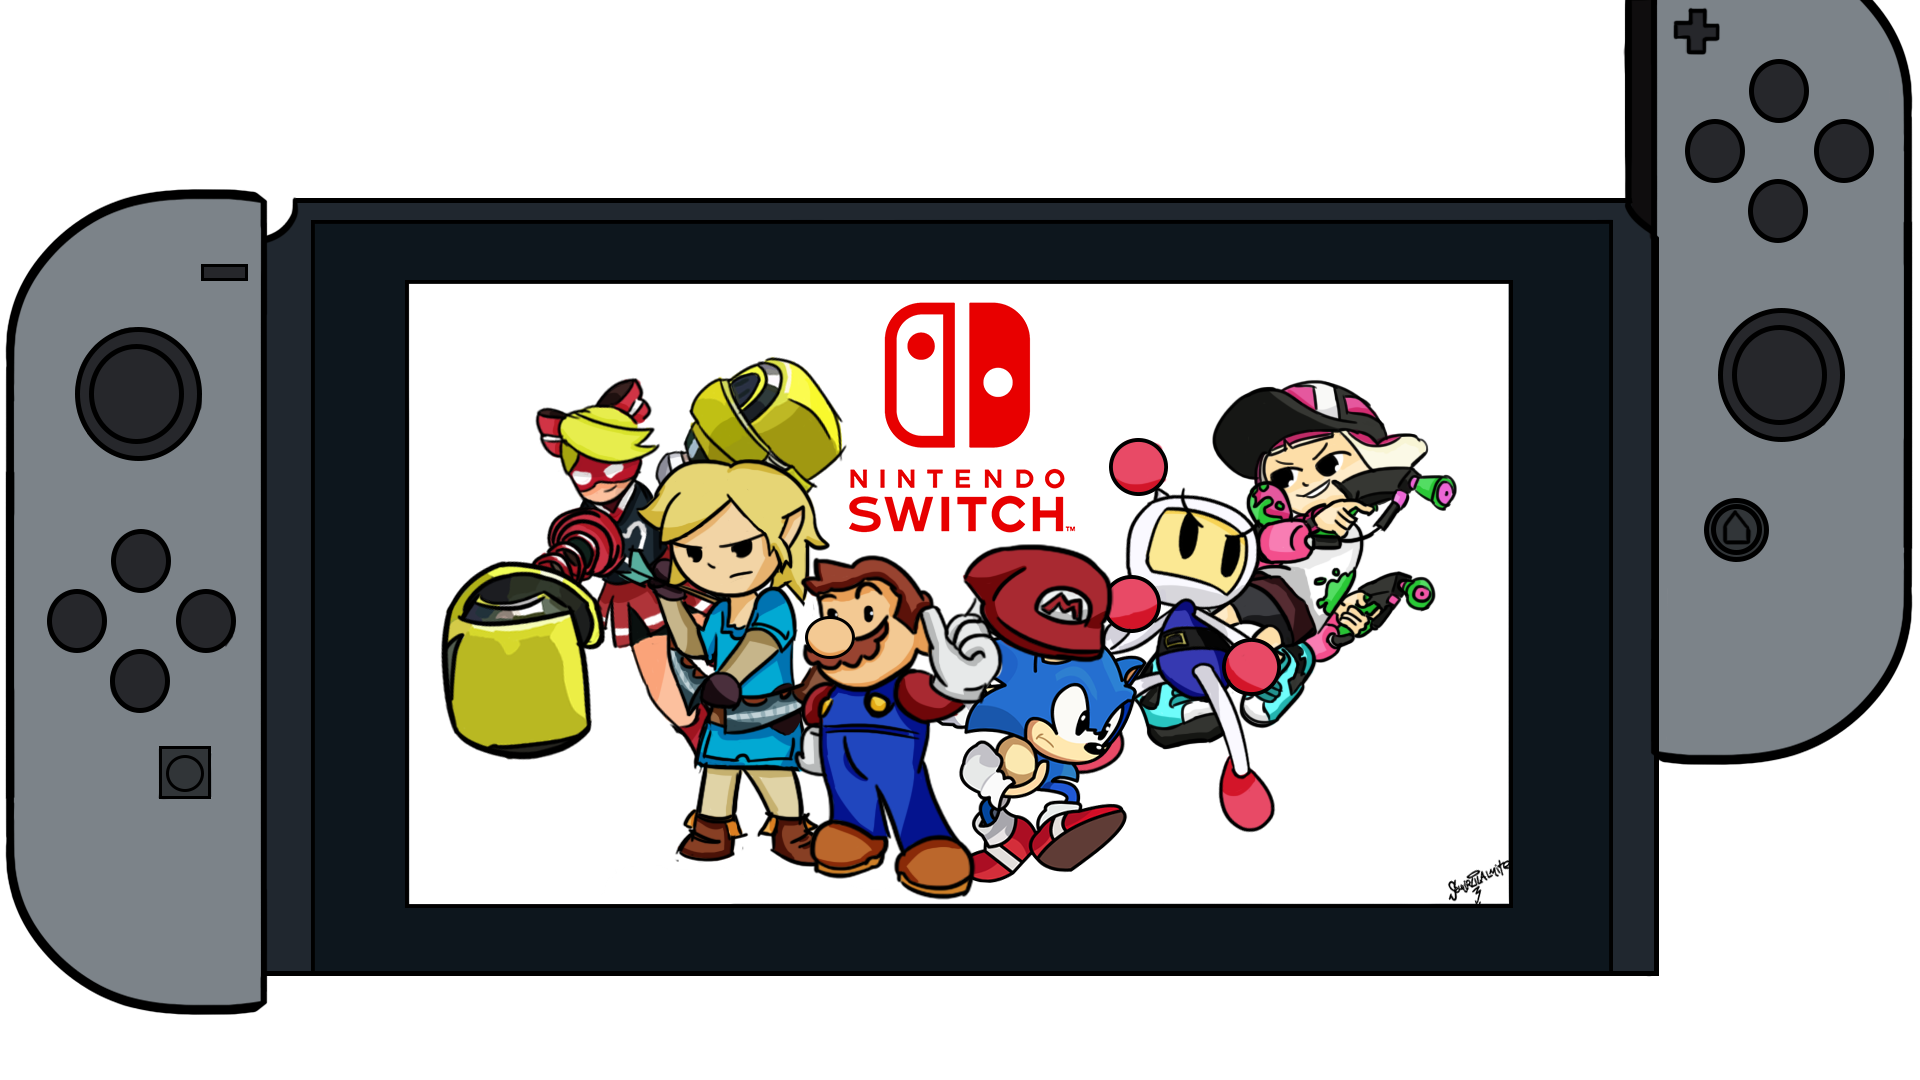 Nintendo switch 1 2 switch. Приставка Нинтендо свитч. Игровая приставка Нинтендо свитч. Nintendo Switch игры для Nintendo Switch. Изображение Нинтендо свитч.